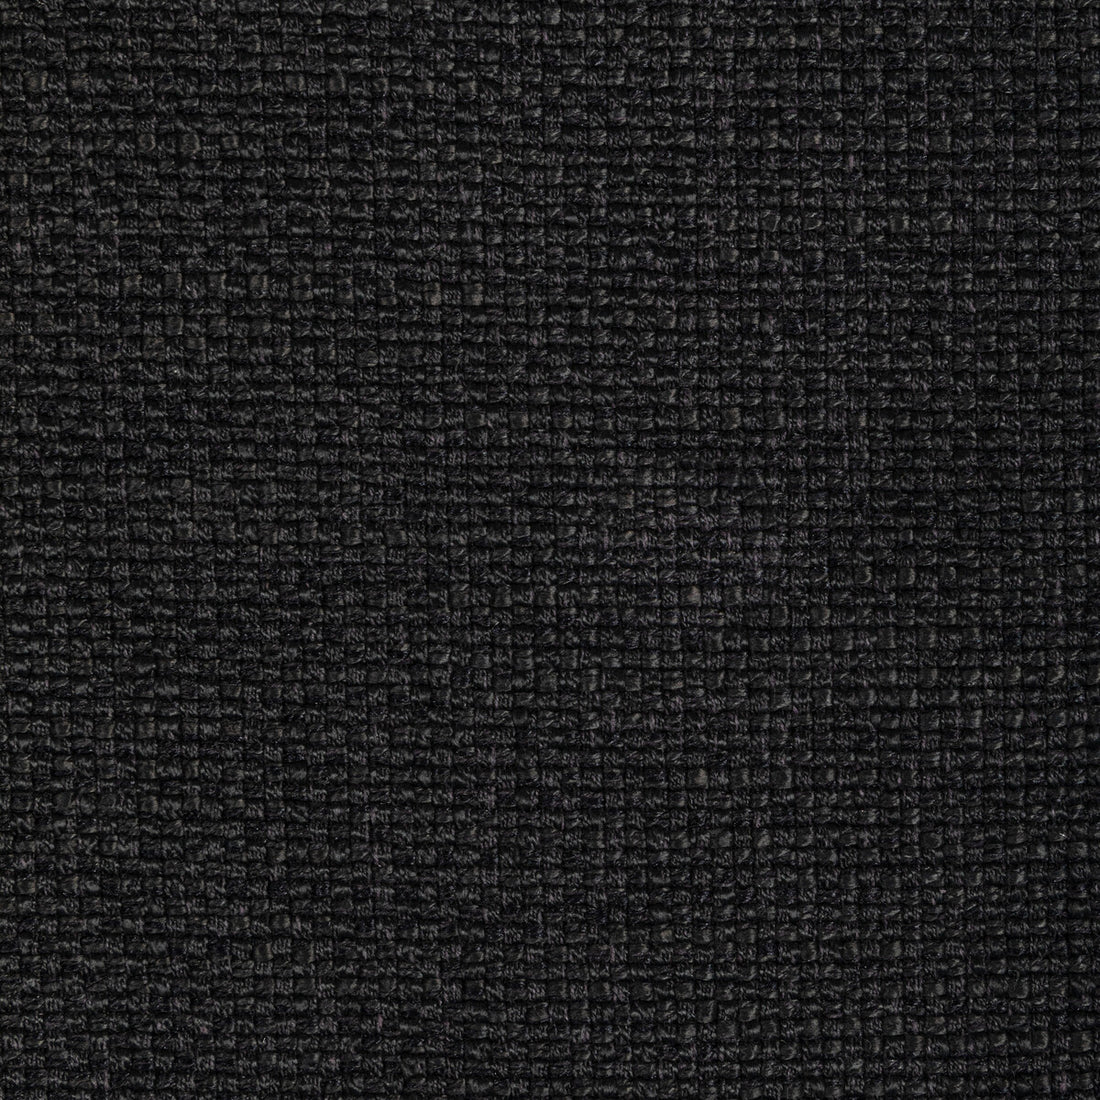 Kravet Design fabric in 36594-8 color - pattern 36594.8.0 - by Kravet Design in the Performance Kravetarmor collection